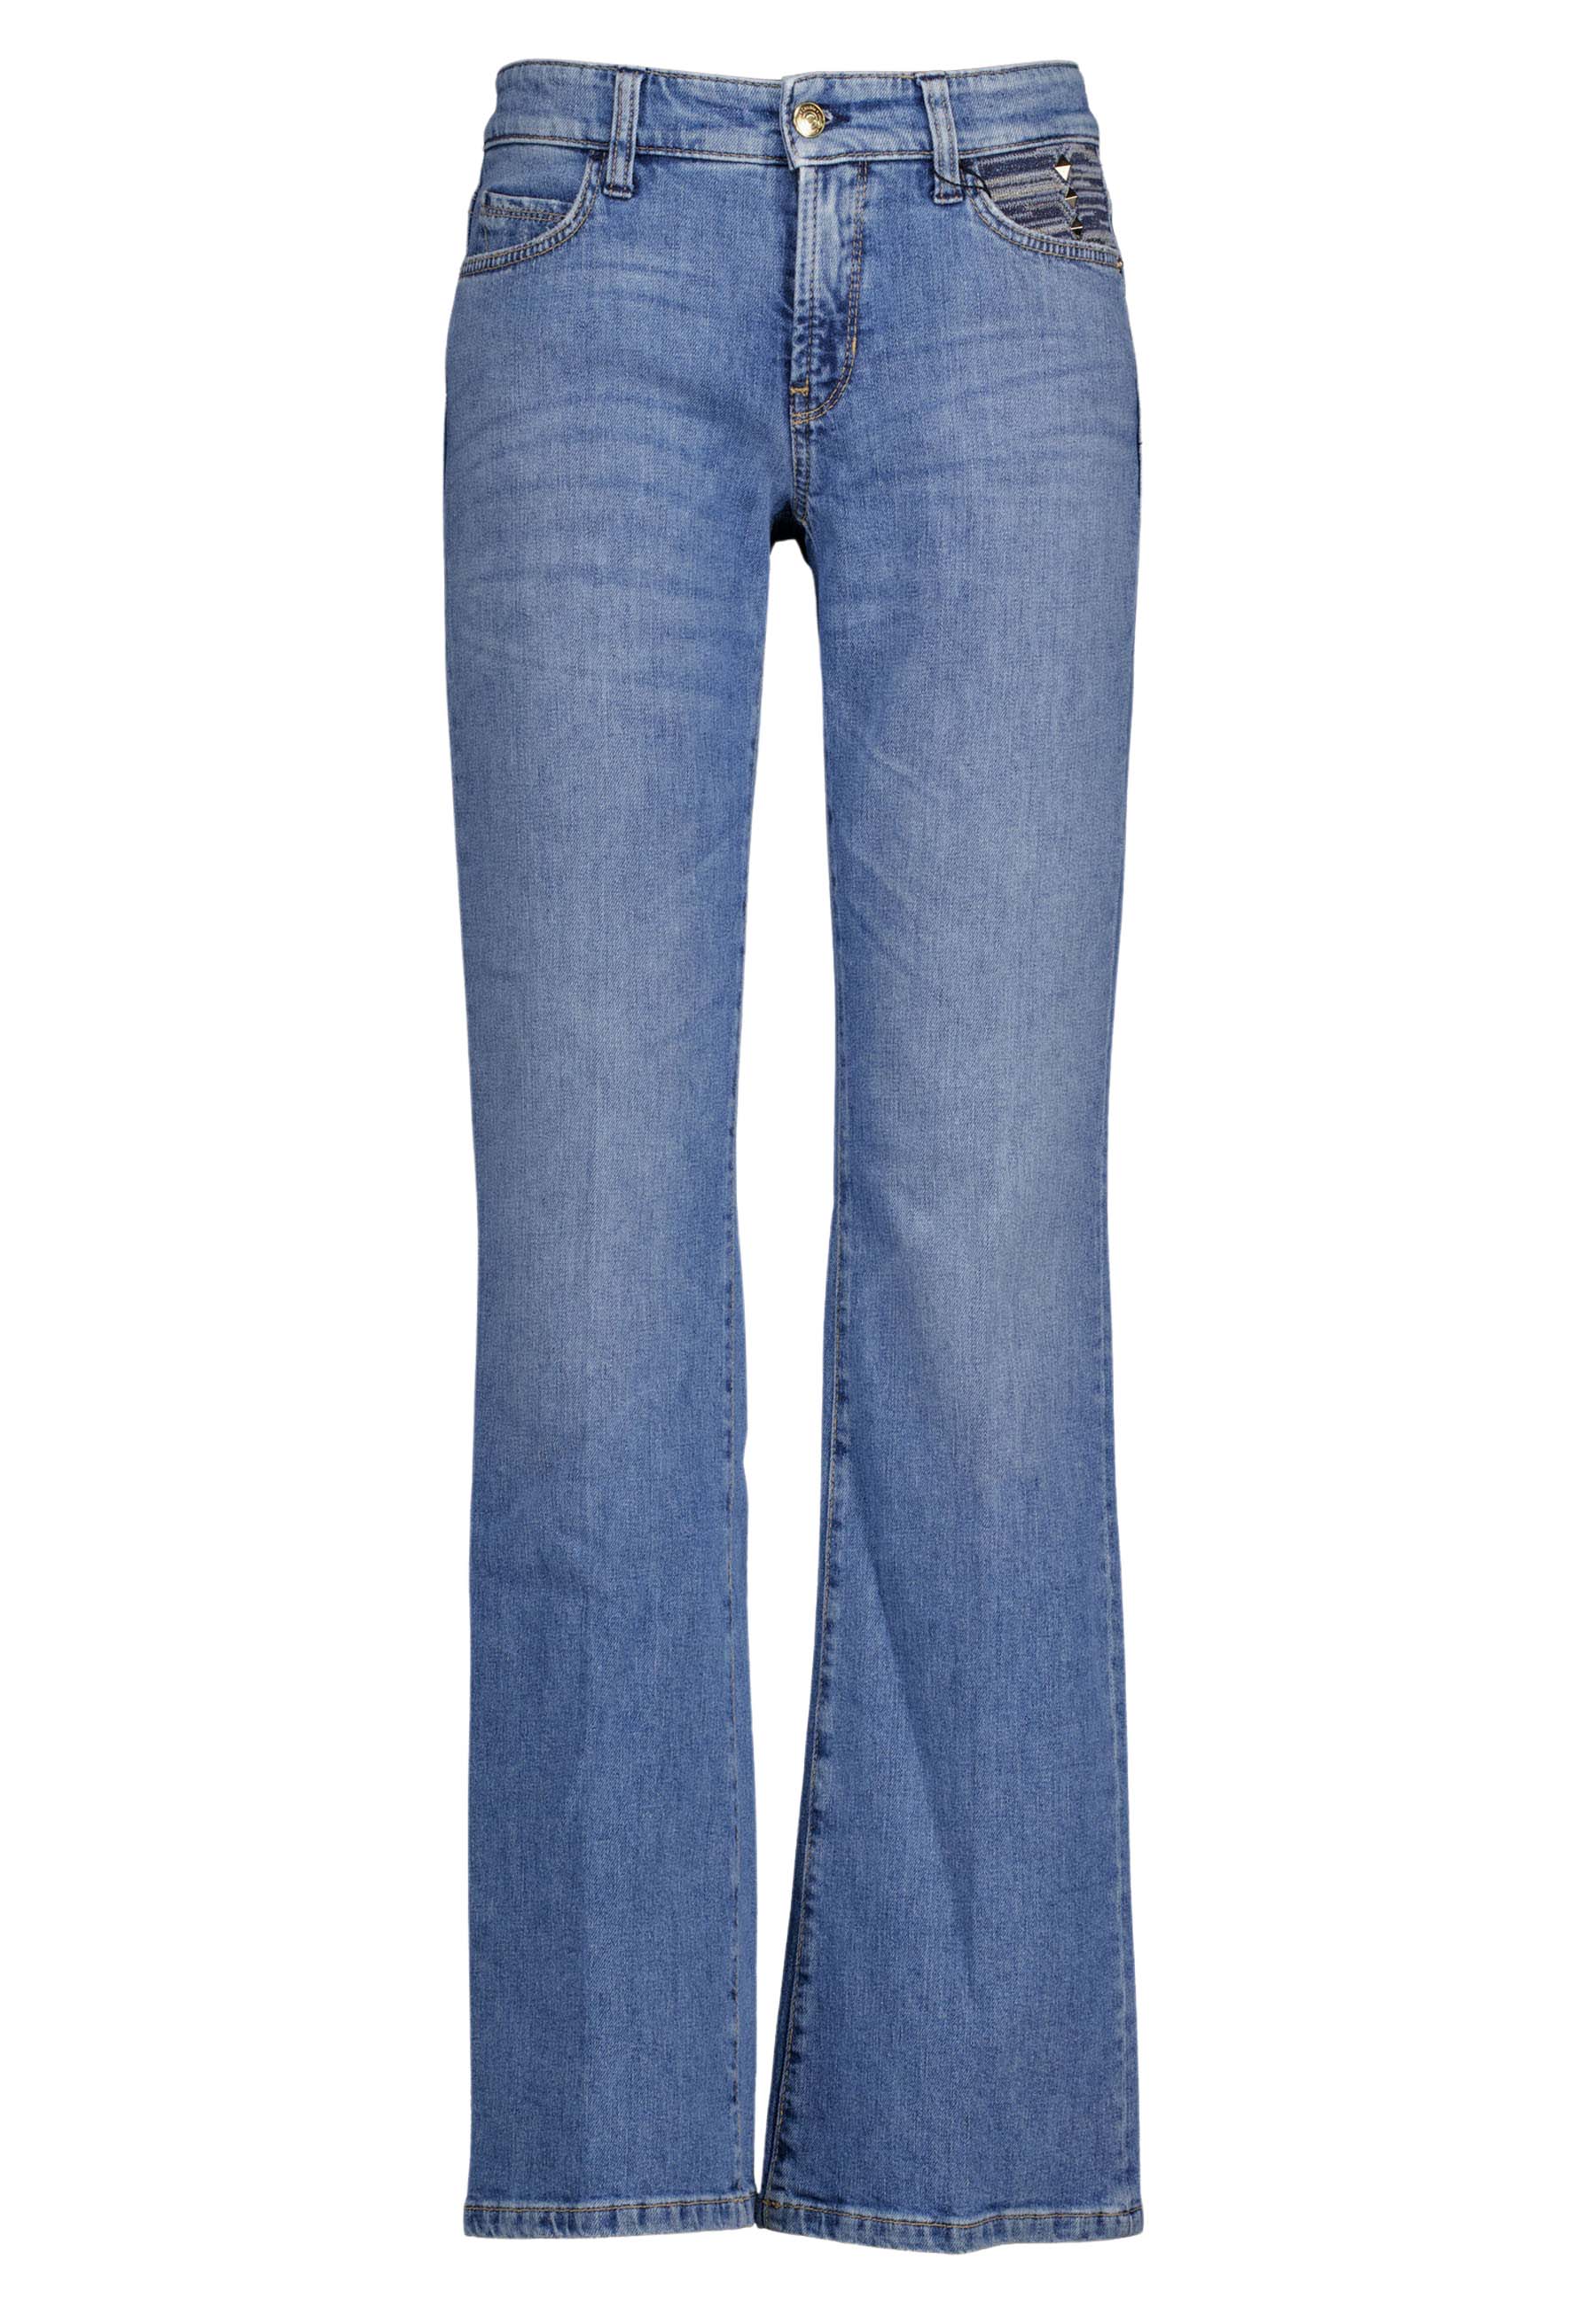 Cambio Jeans Blauw Katoen maat 40 Paris flared flared jeans blauw